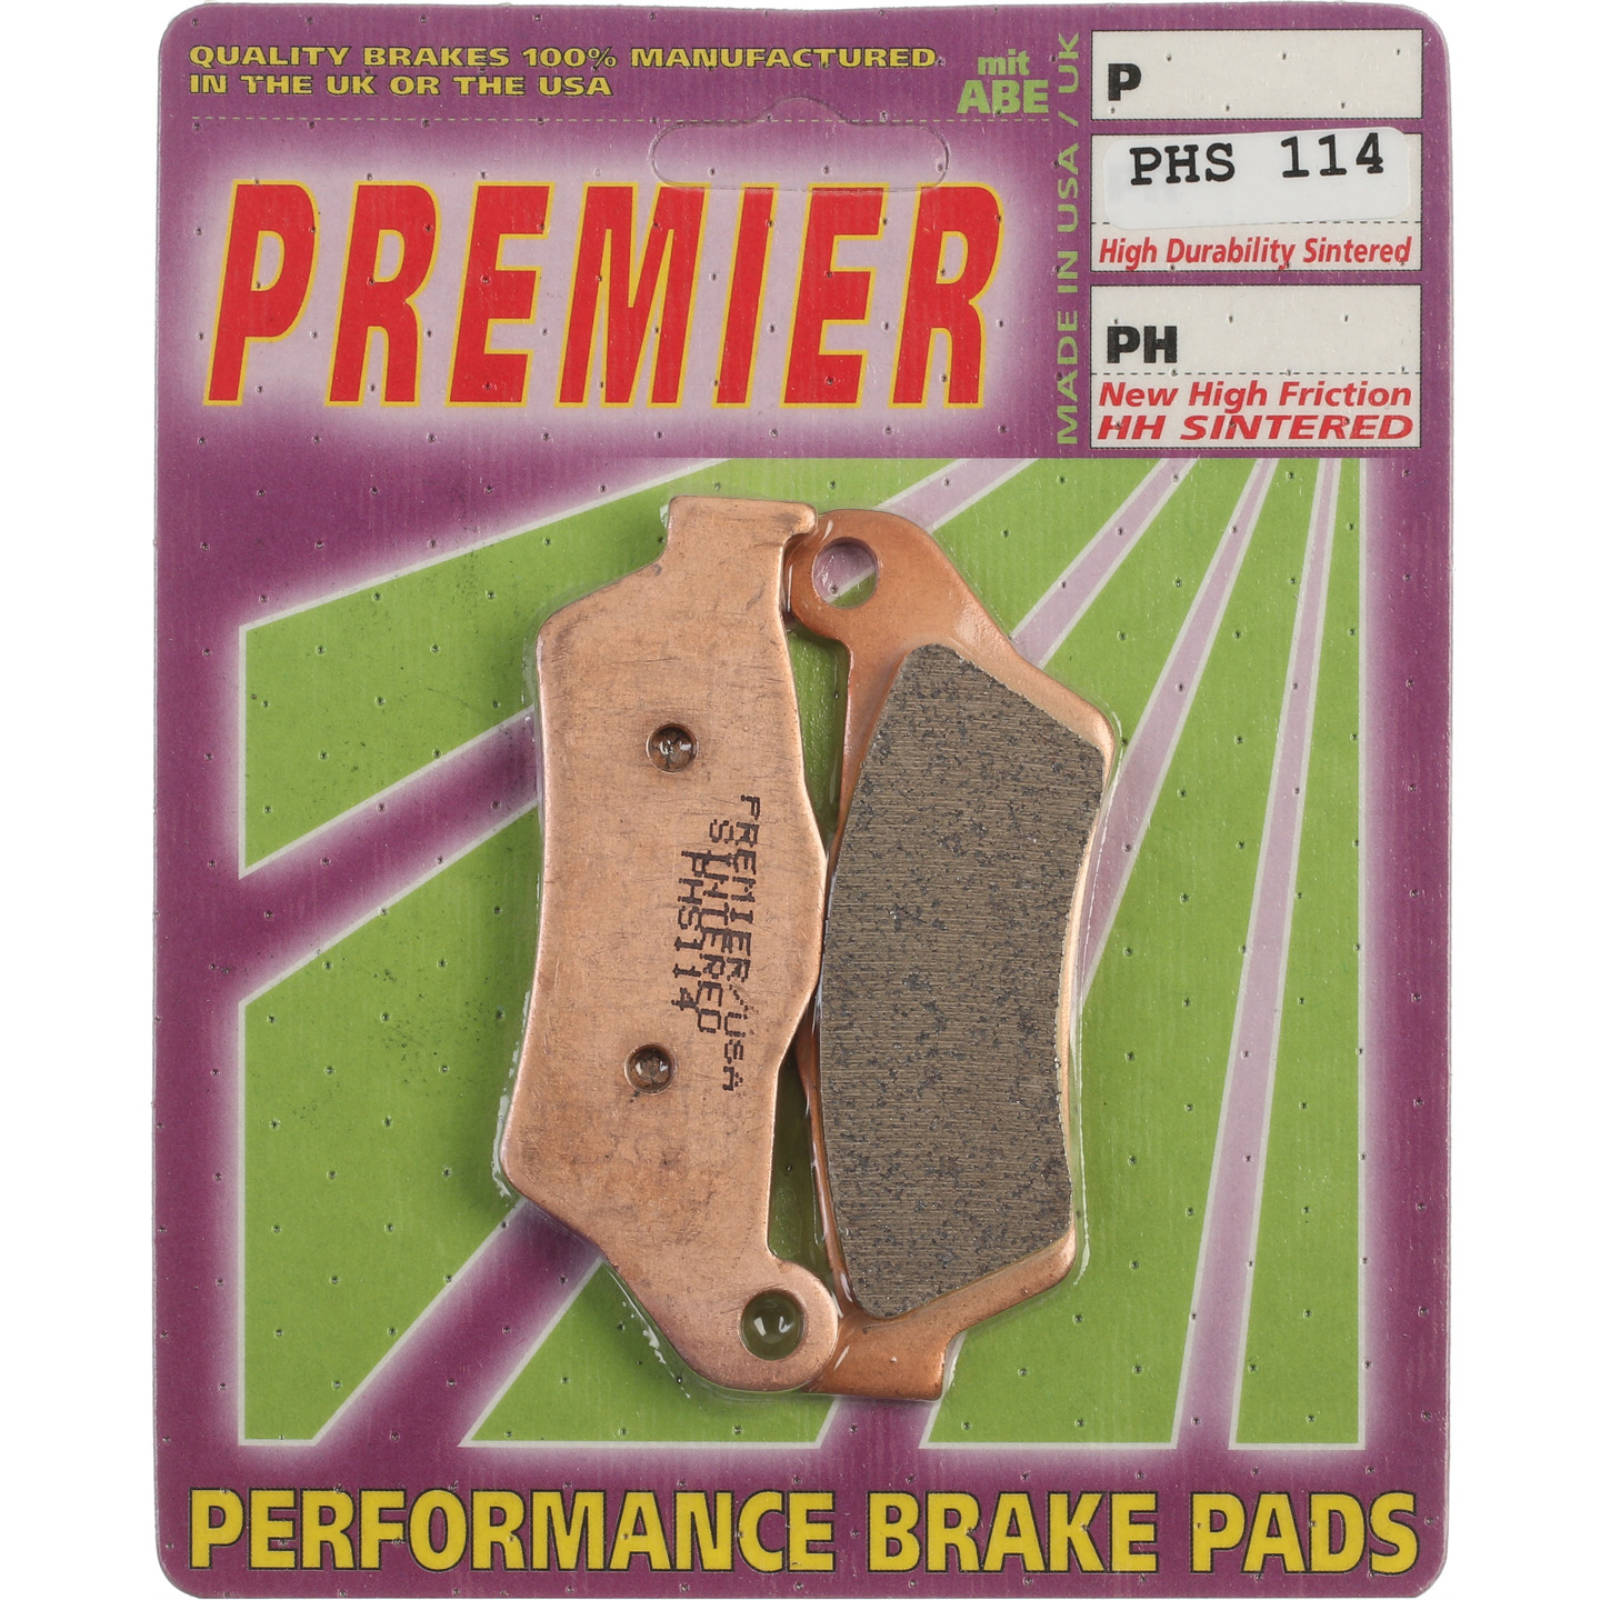 New PREMIER Brake Pad - PH Street Sintered (GF031S3) #PBPH114